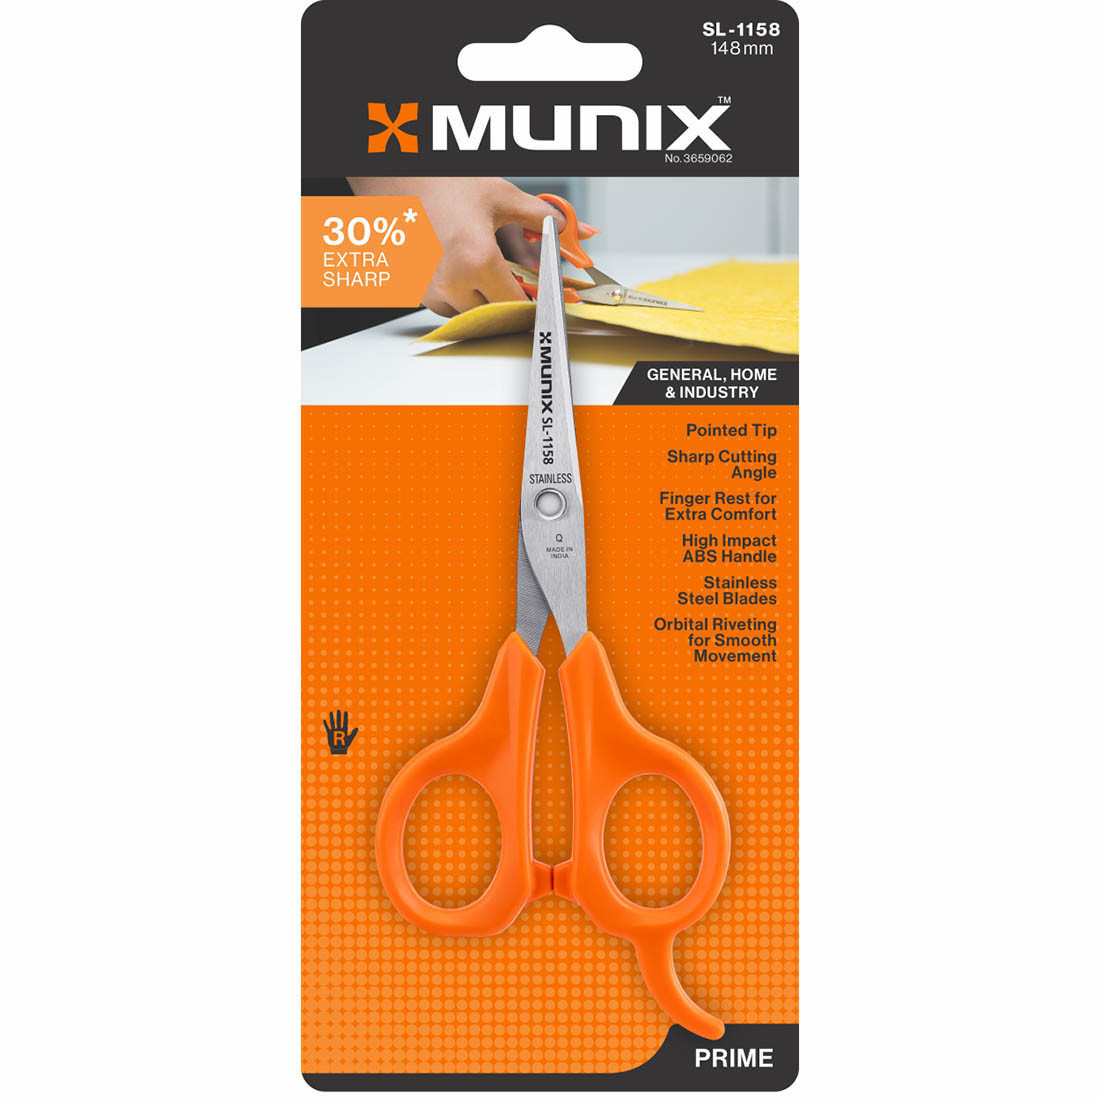 Kangaro Munix Scissors SL- 1158, 148 mm , ( General, Home & Office ) Pack of 1